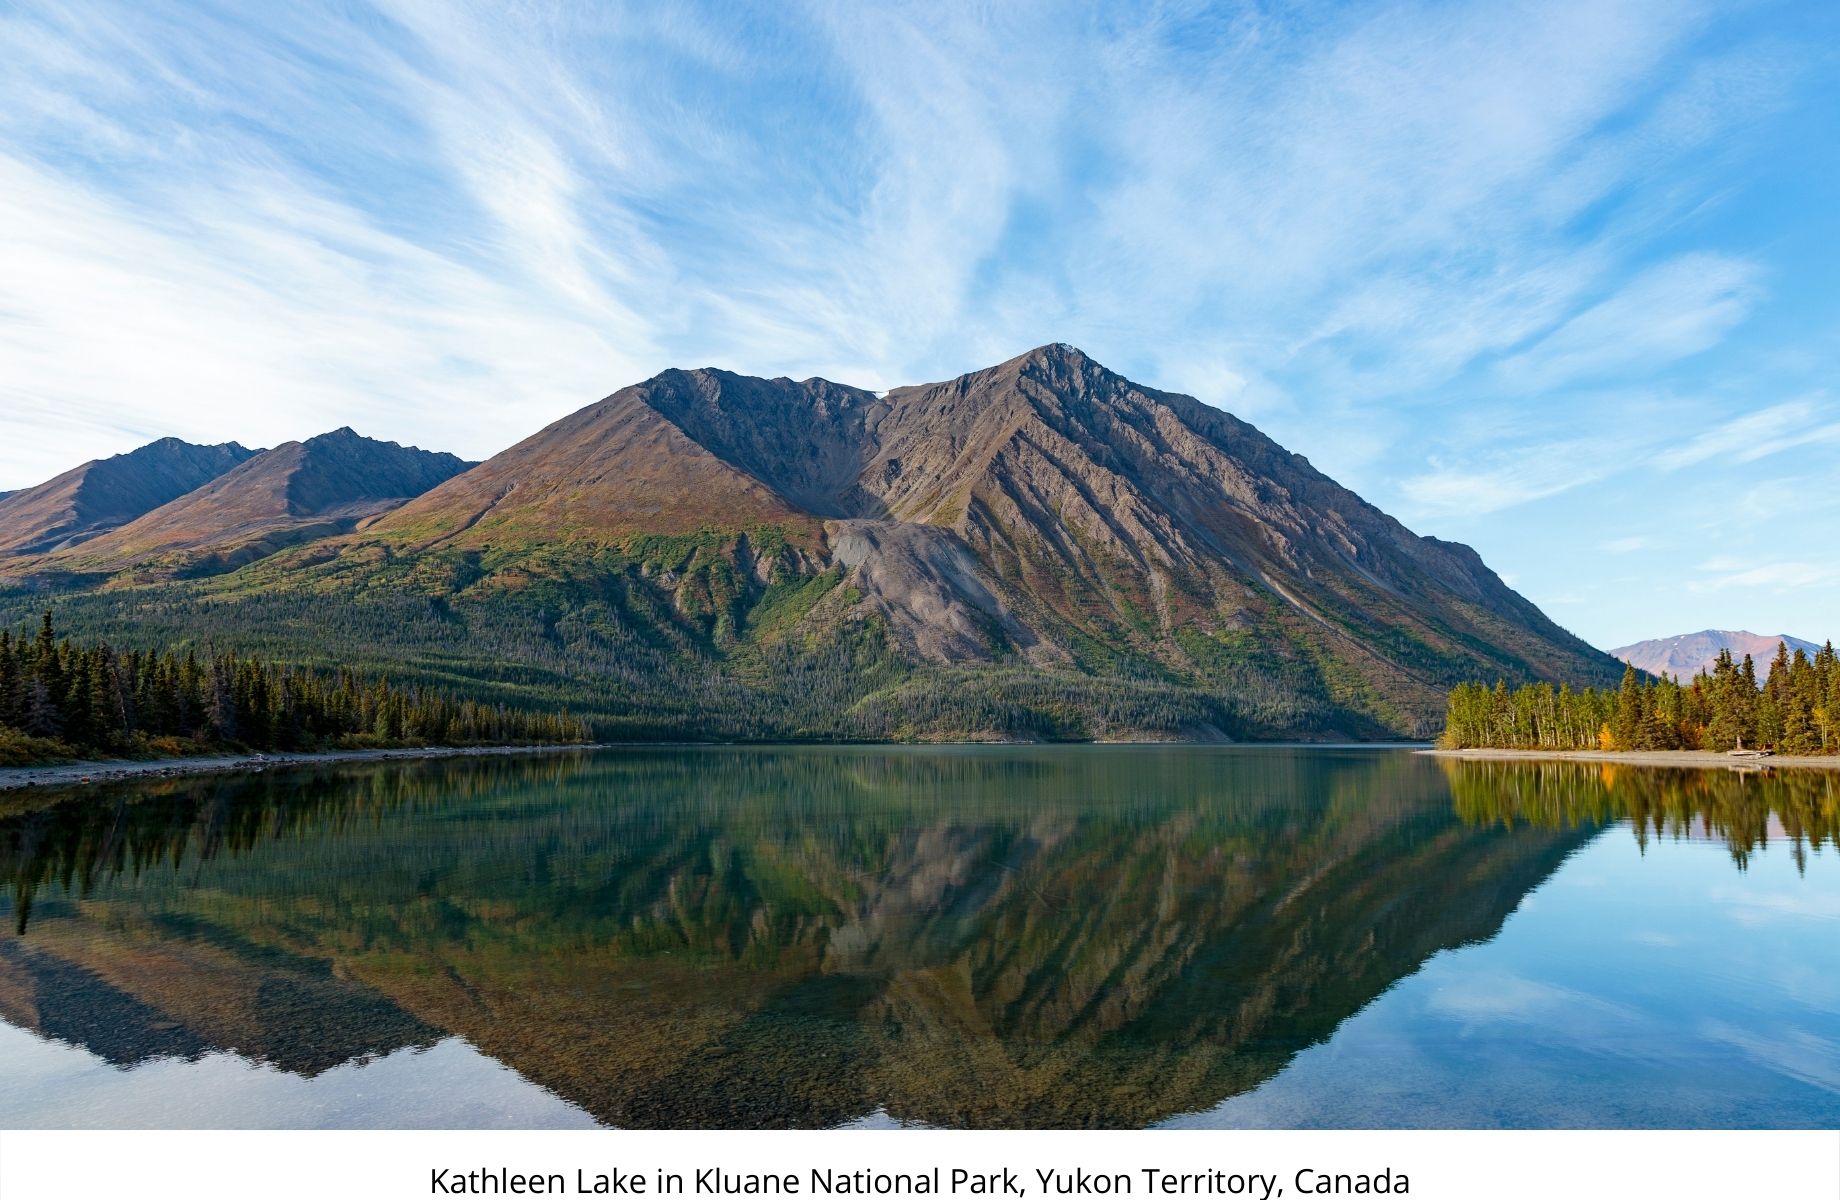 Kathleen Lake in Kluane National Park, Yukon Territory, Canada